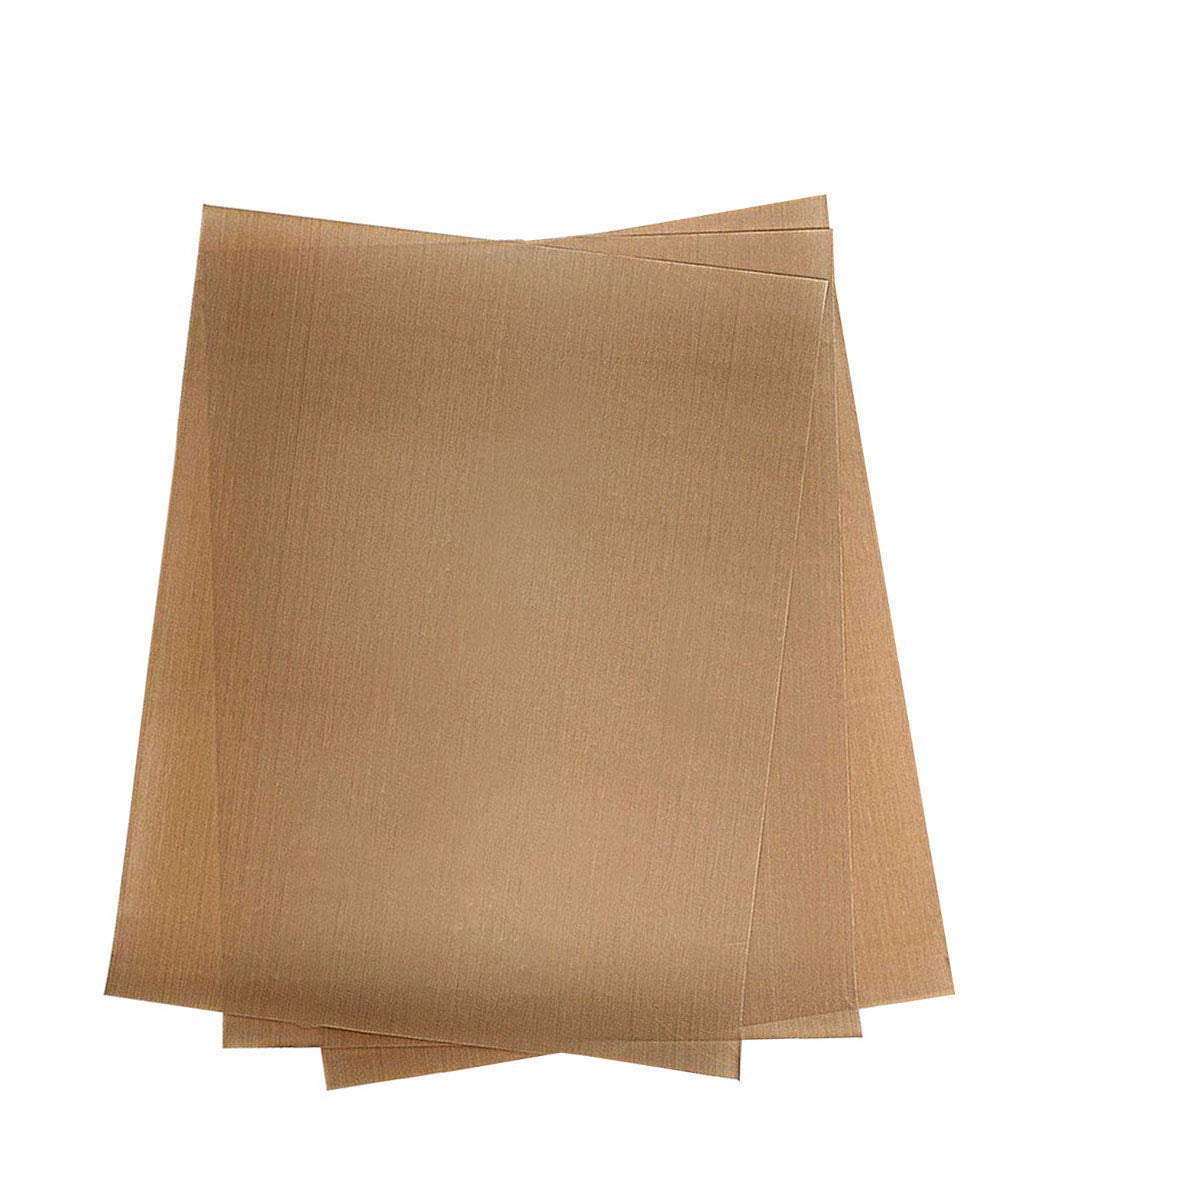 6x Teflon Sheet for Heat Press PTFE Cover Paper Mat Non-Stick for Baking Clothes 